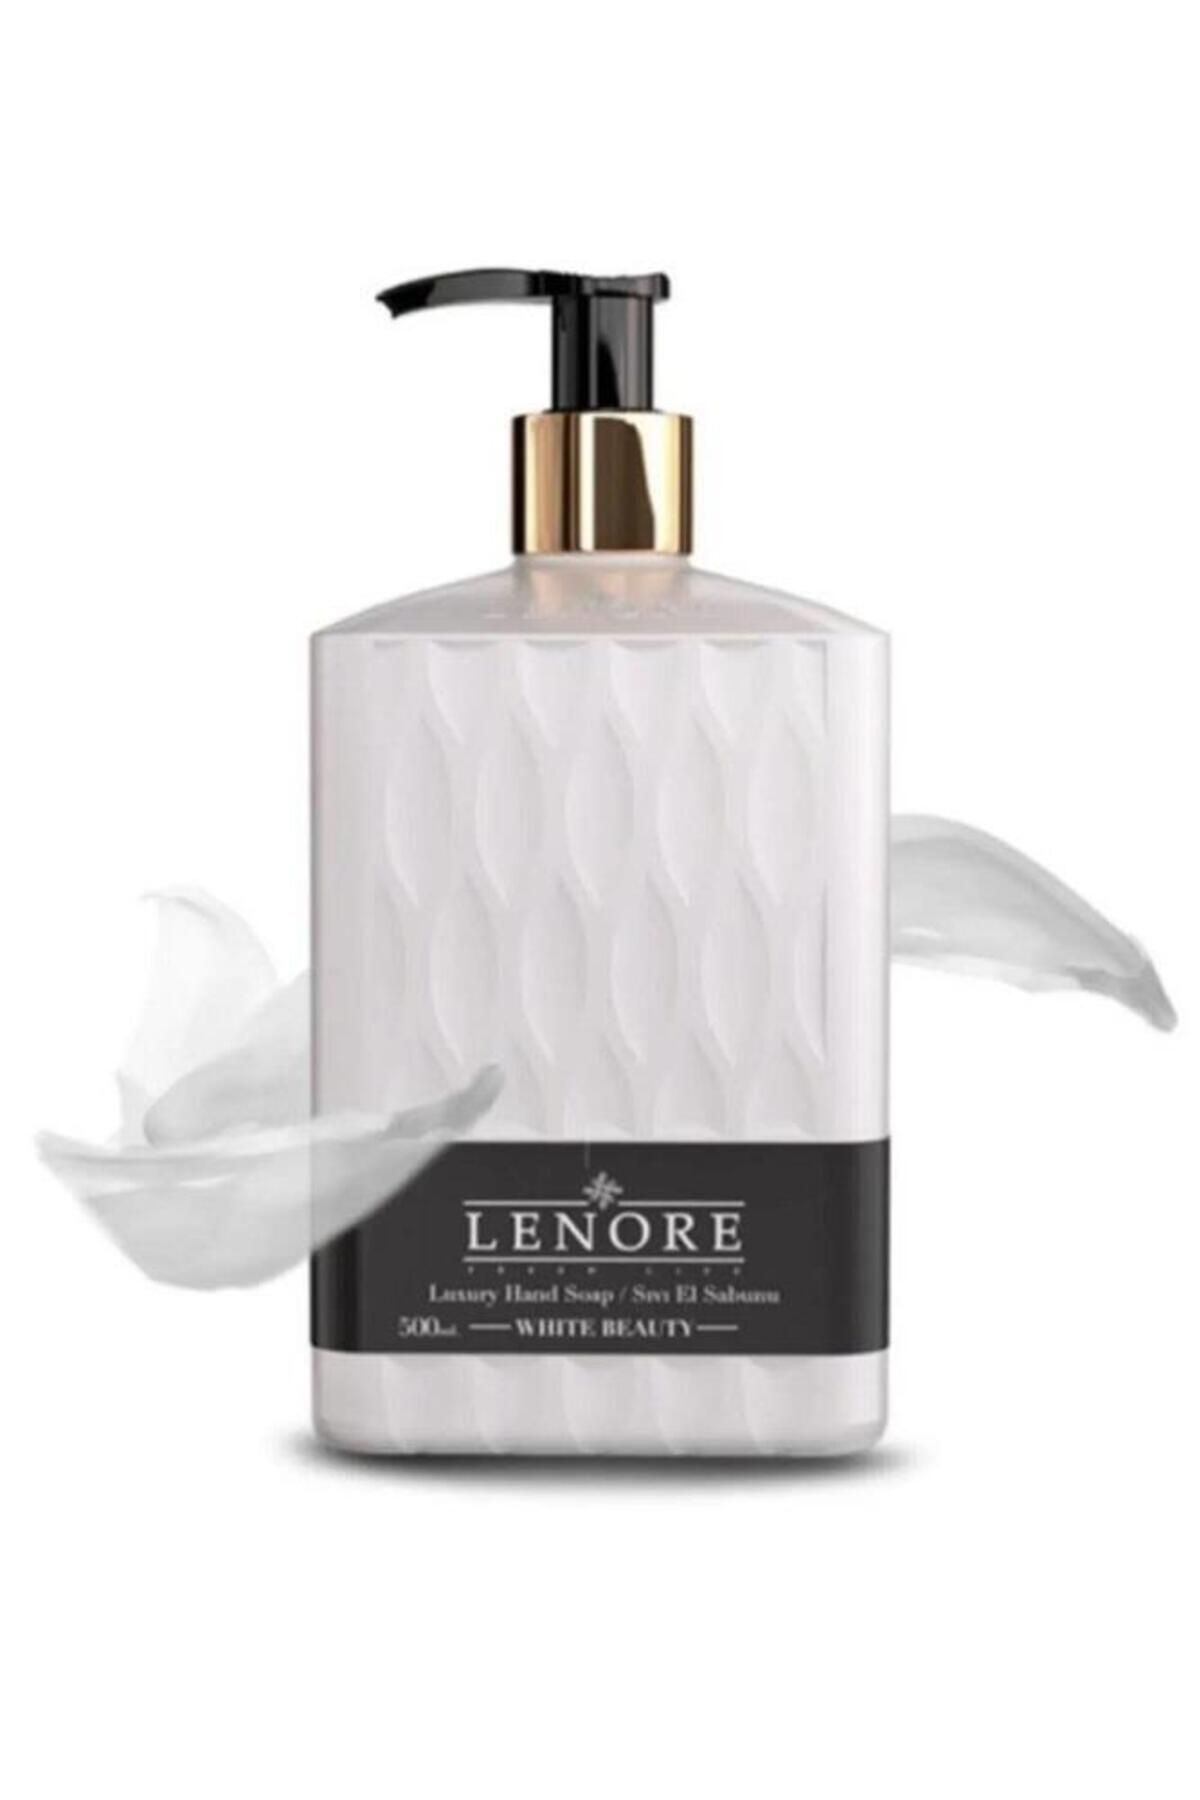 LENORE White Beauty Sıvı Sabun 500ml Kare